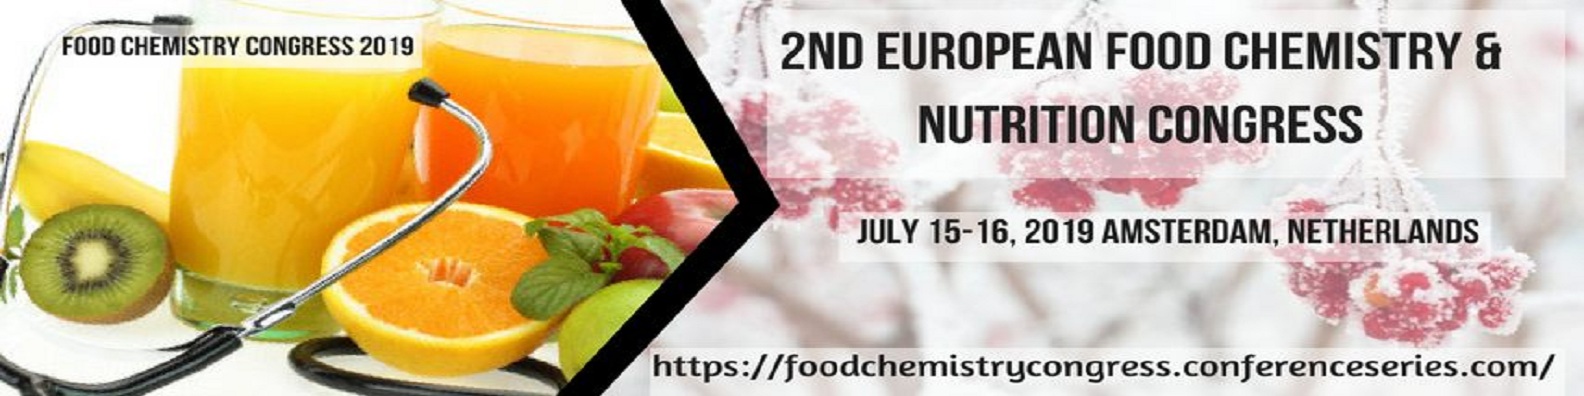 2nd European Food Chemistry & Nutrition Congress, Amsterdam, Netherlands